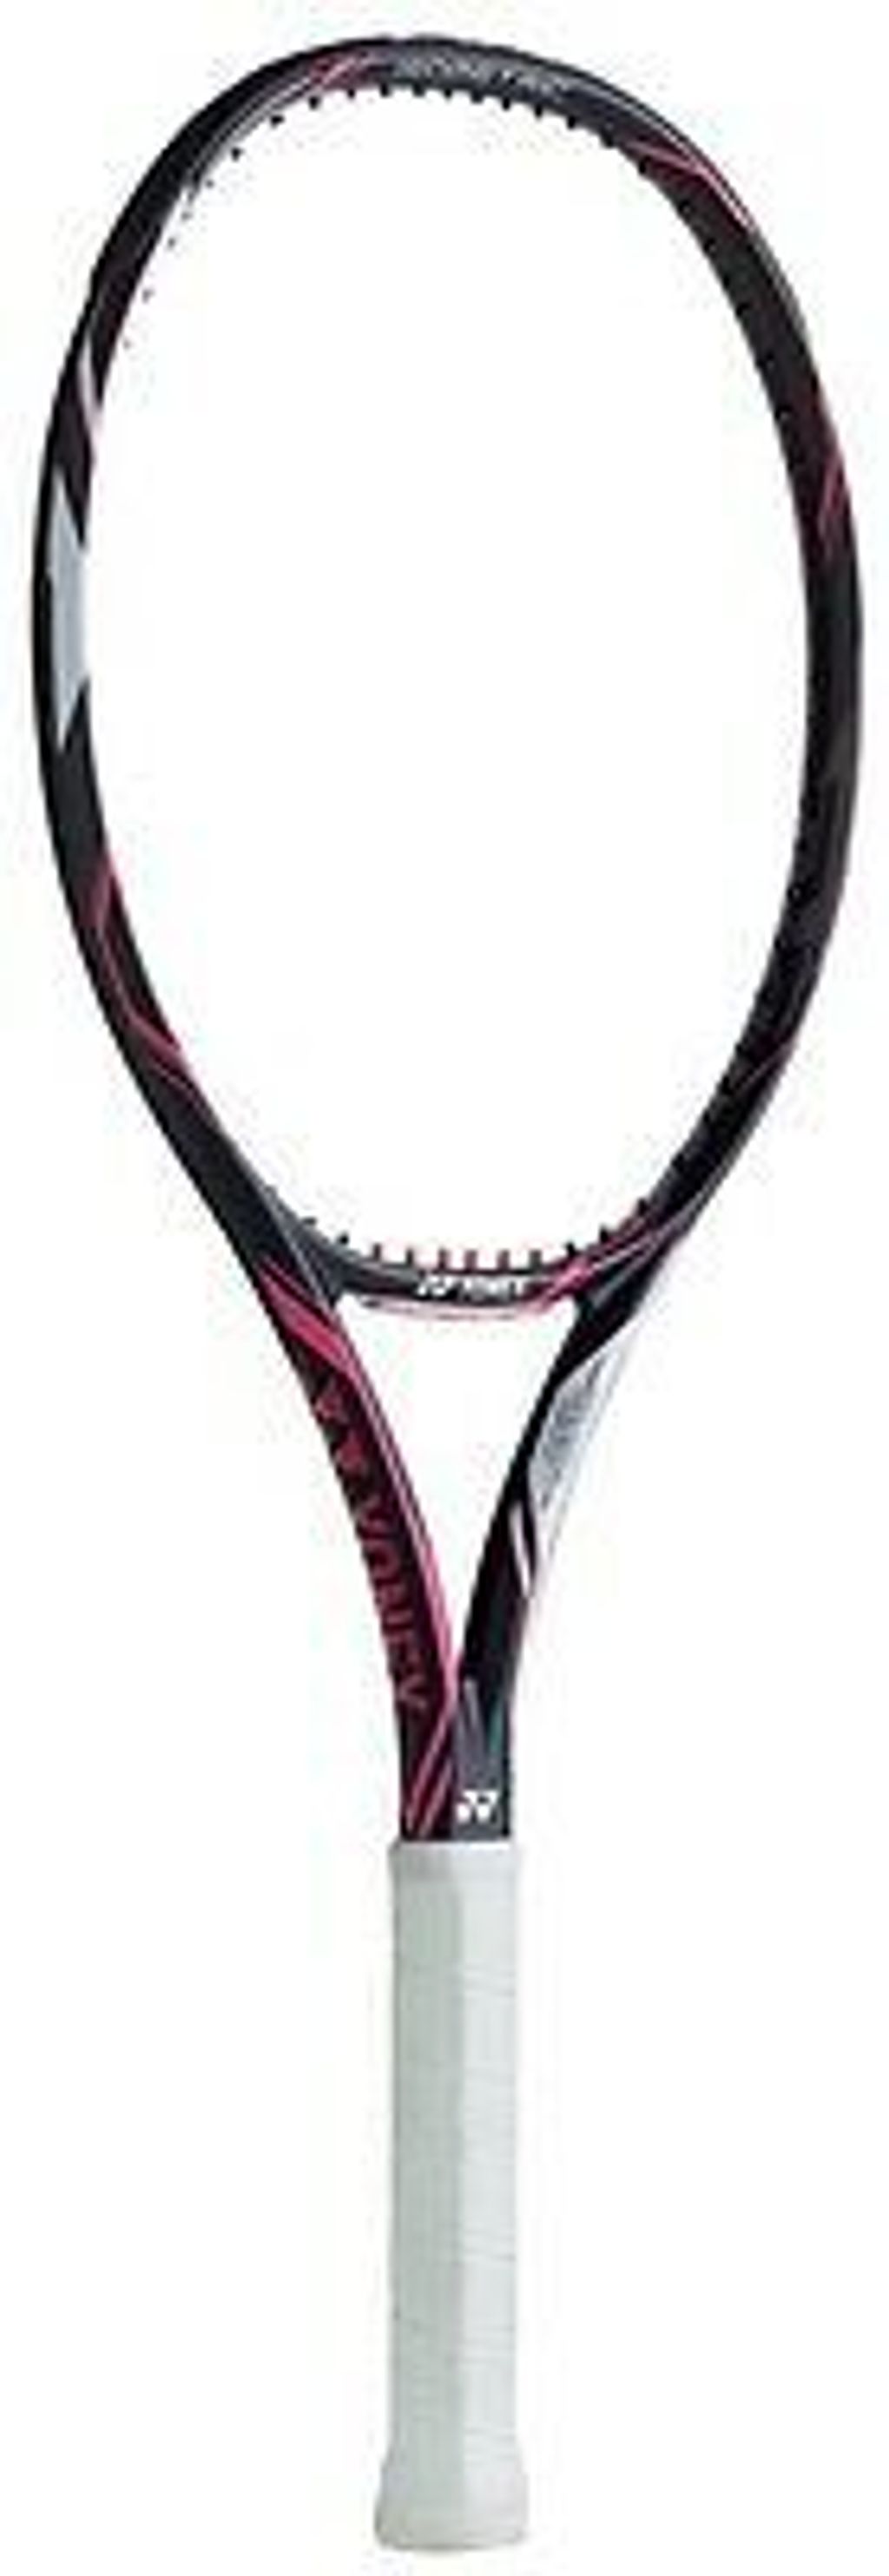 Yonex-EZONE-DR-Lite-Tennis-Pink-Racquet-Frame.jpg